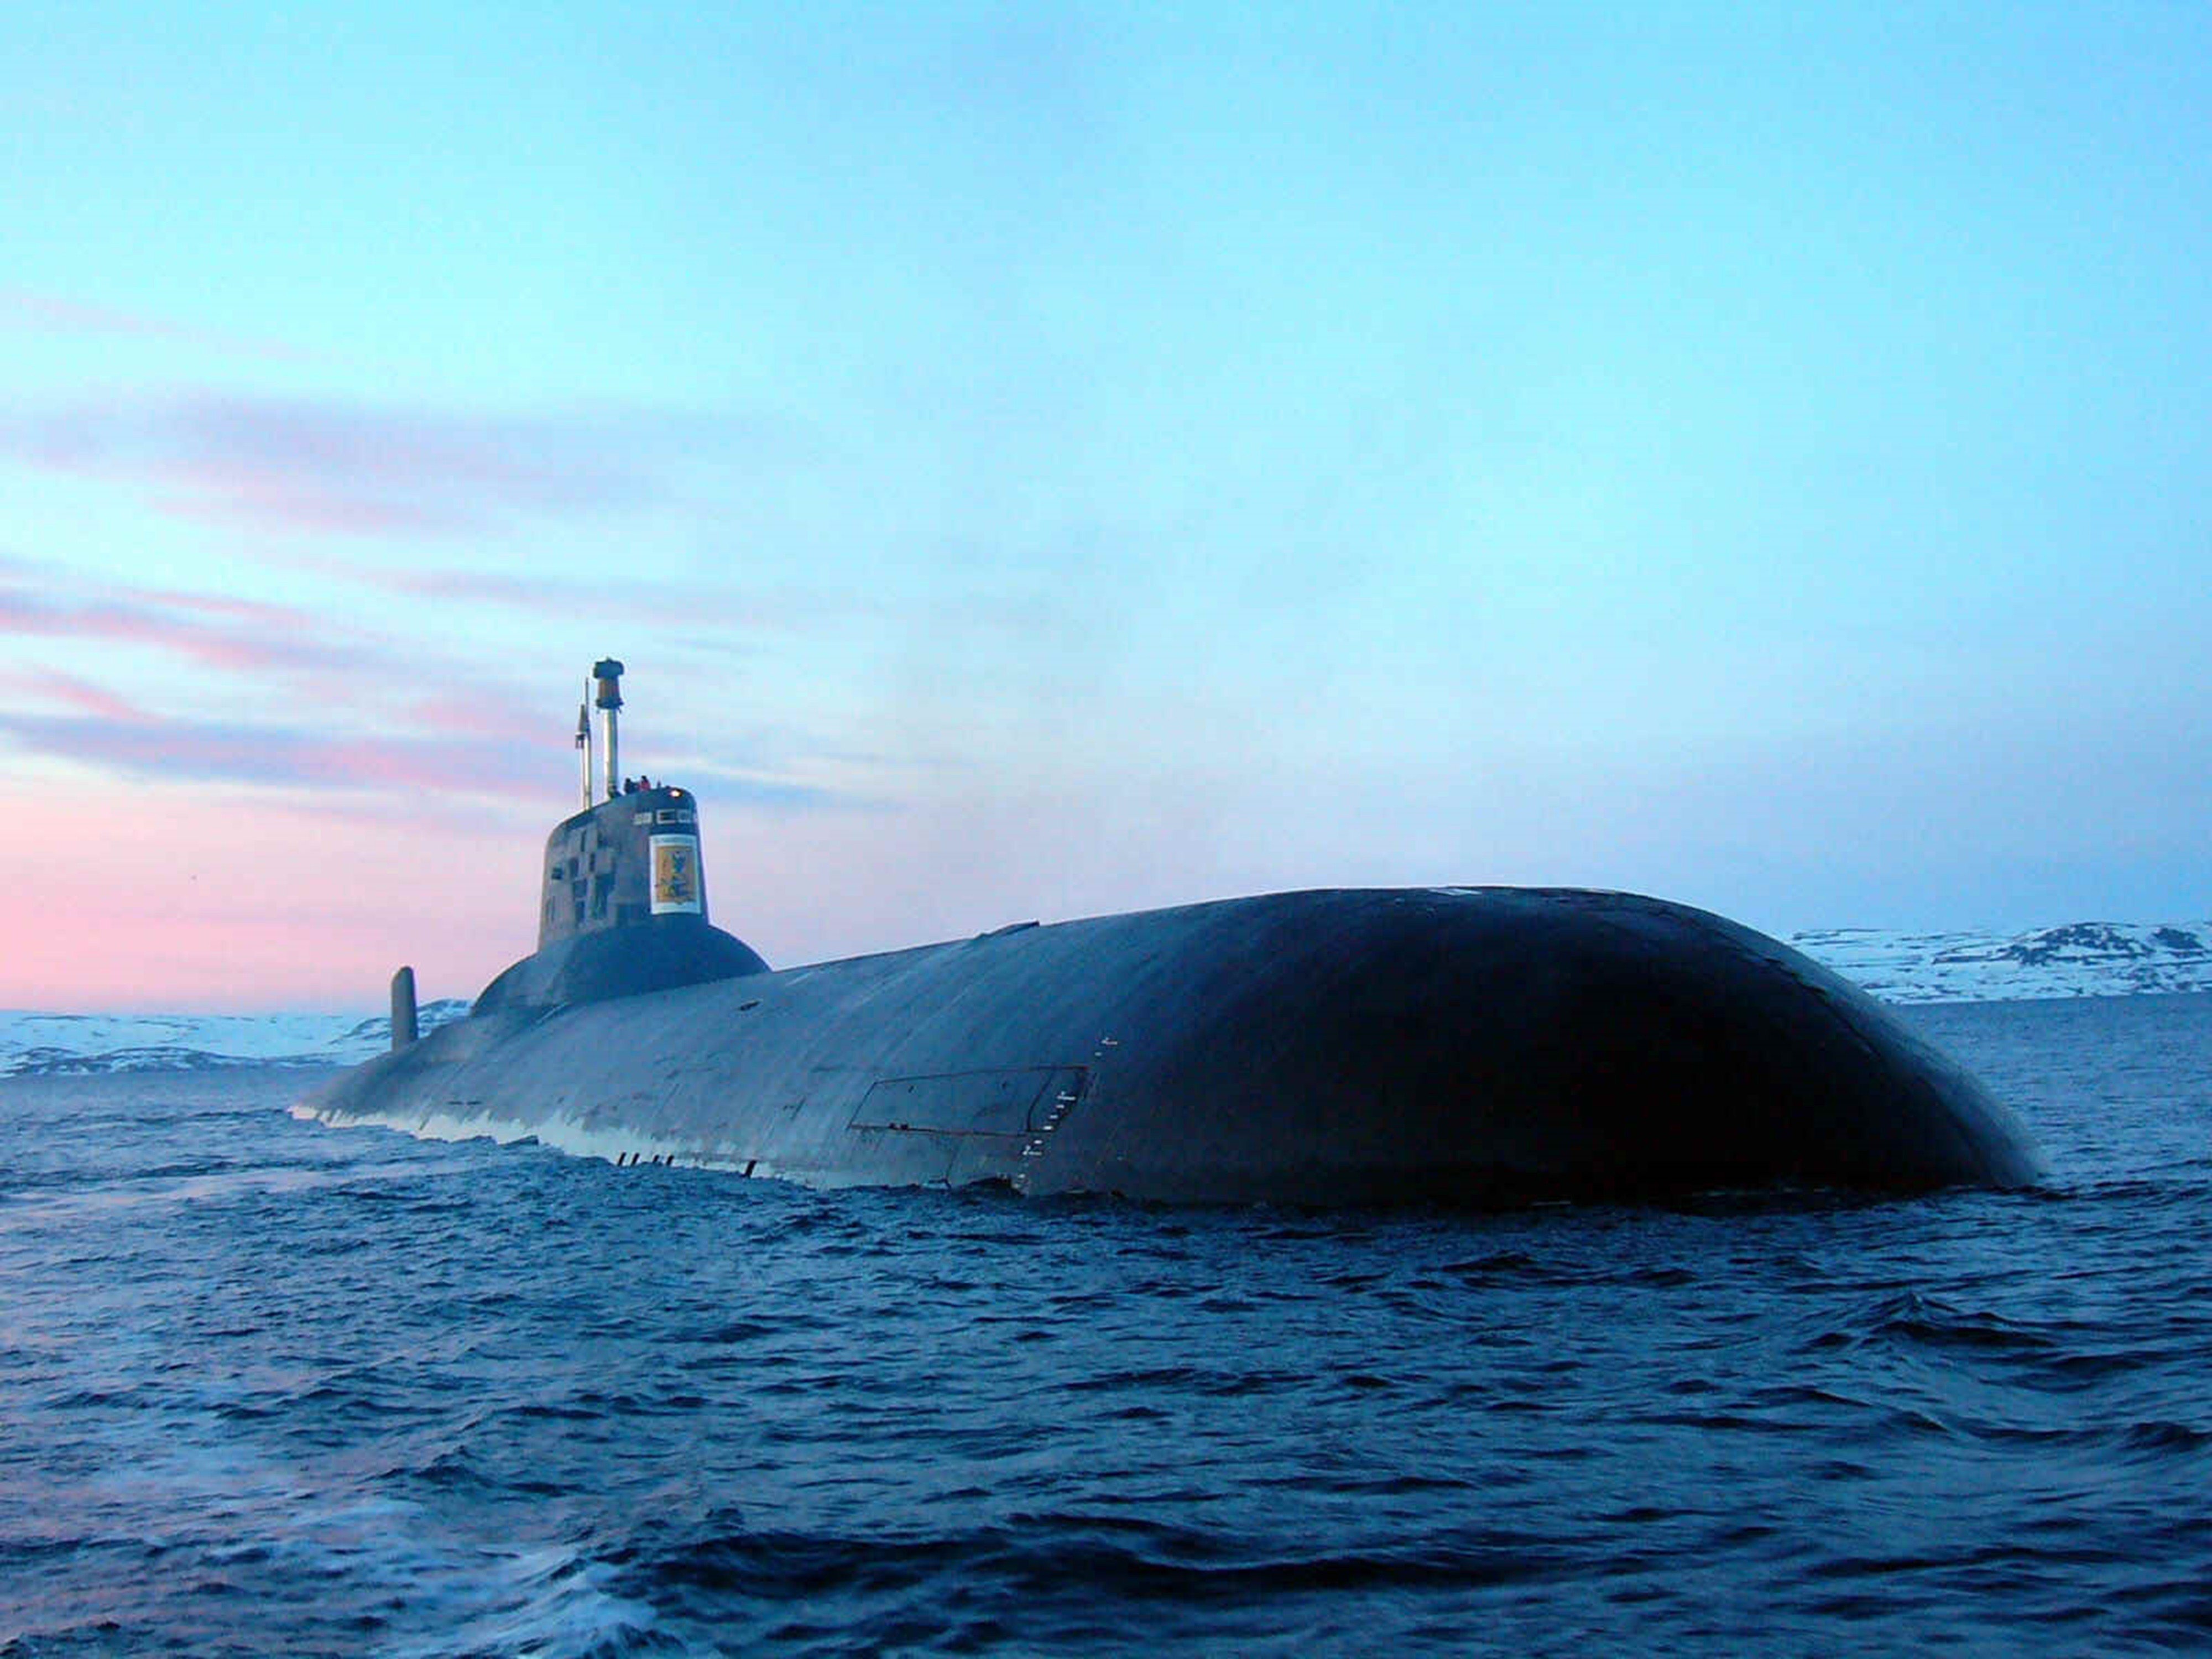  Submarine Warship Navy Ocean Nuclear 4000X3000 Wallpaper Background